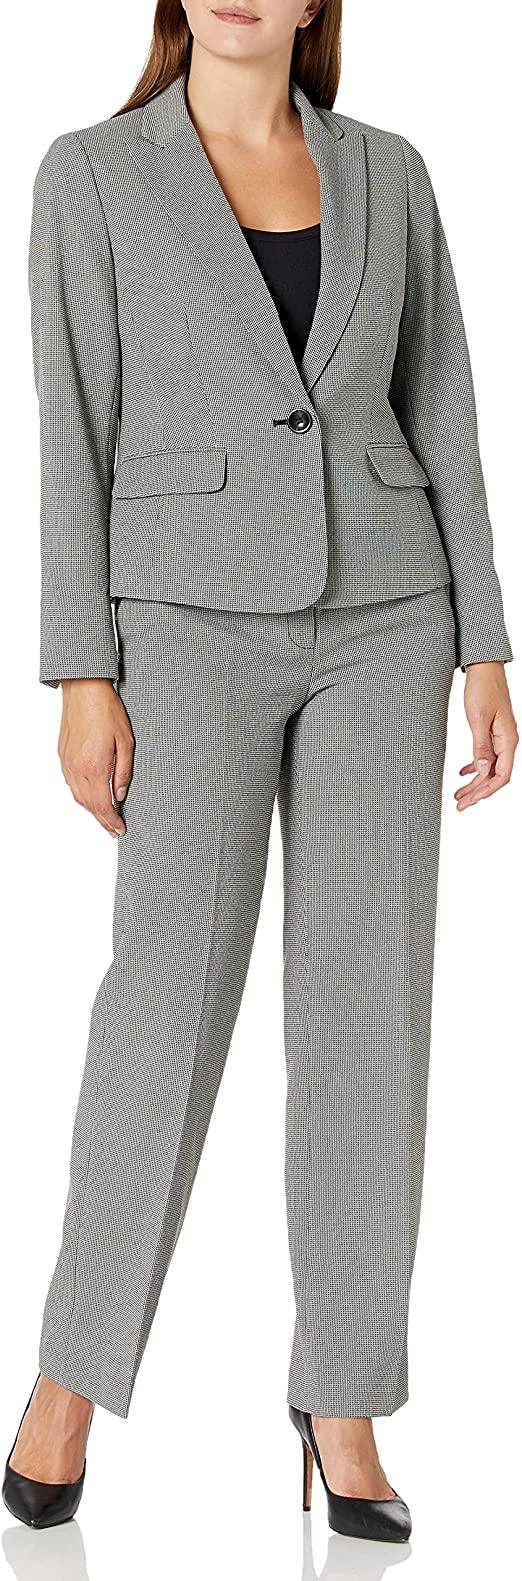 Le Suit Formal Long Sleeve Two Piece Pant Suit - The Dress Outlet